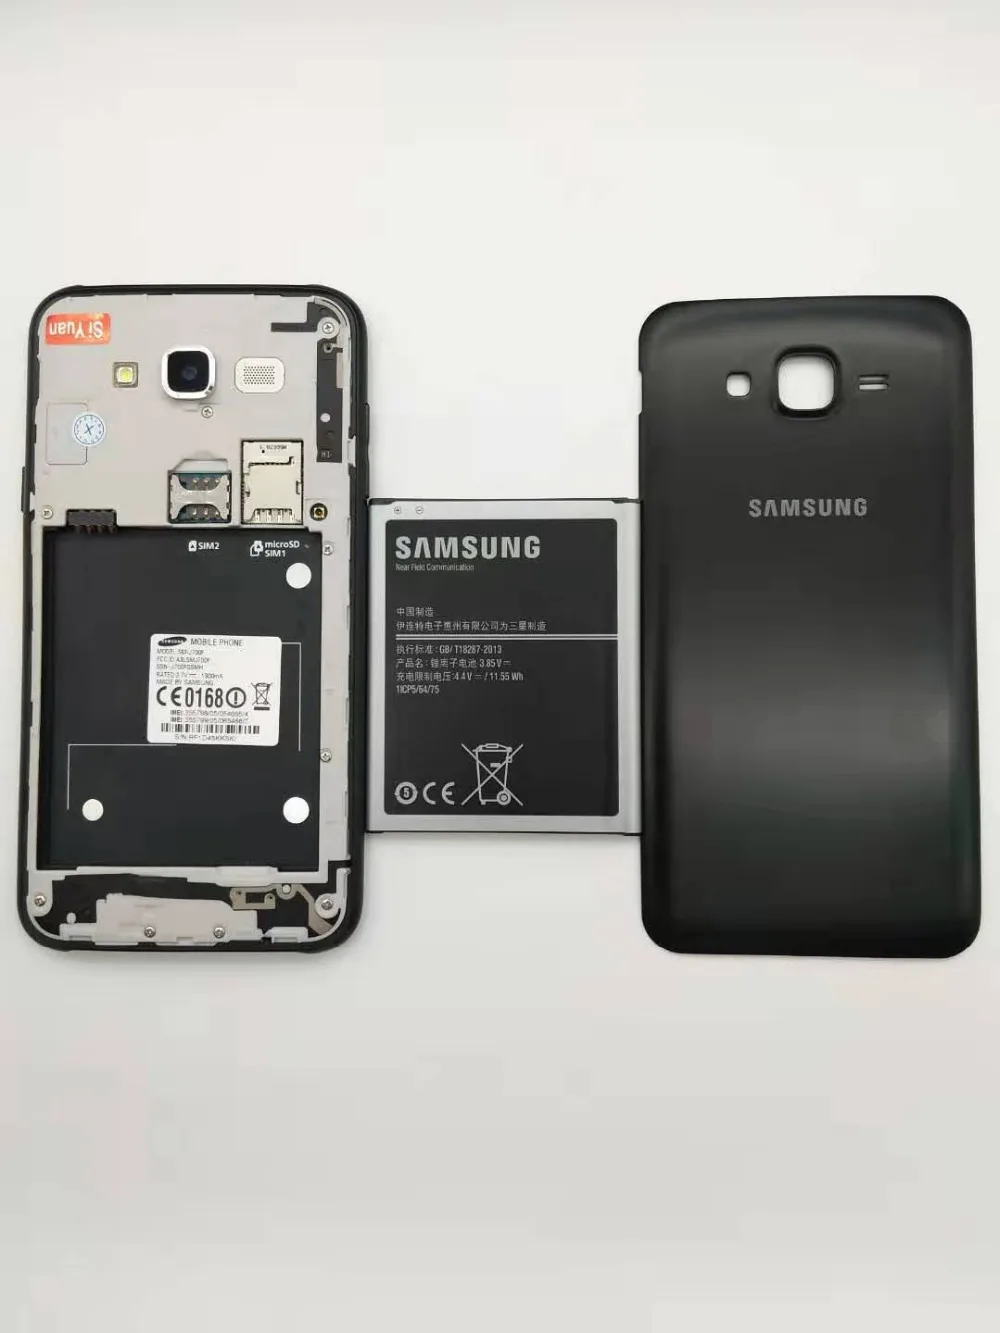 

Samsung J7 Refurbished-Original Galaxy J7 unlocked Duos GSM 4G LTE Android Phone Octa Core Dual Sim 5.5" RAM 1.5GB ROM 16GB